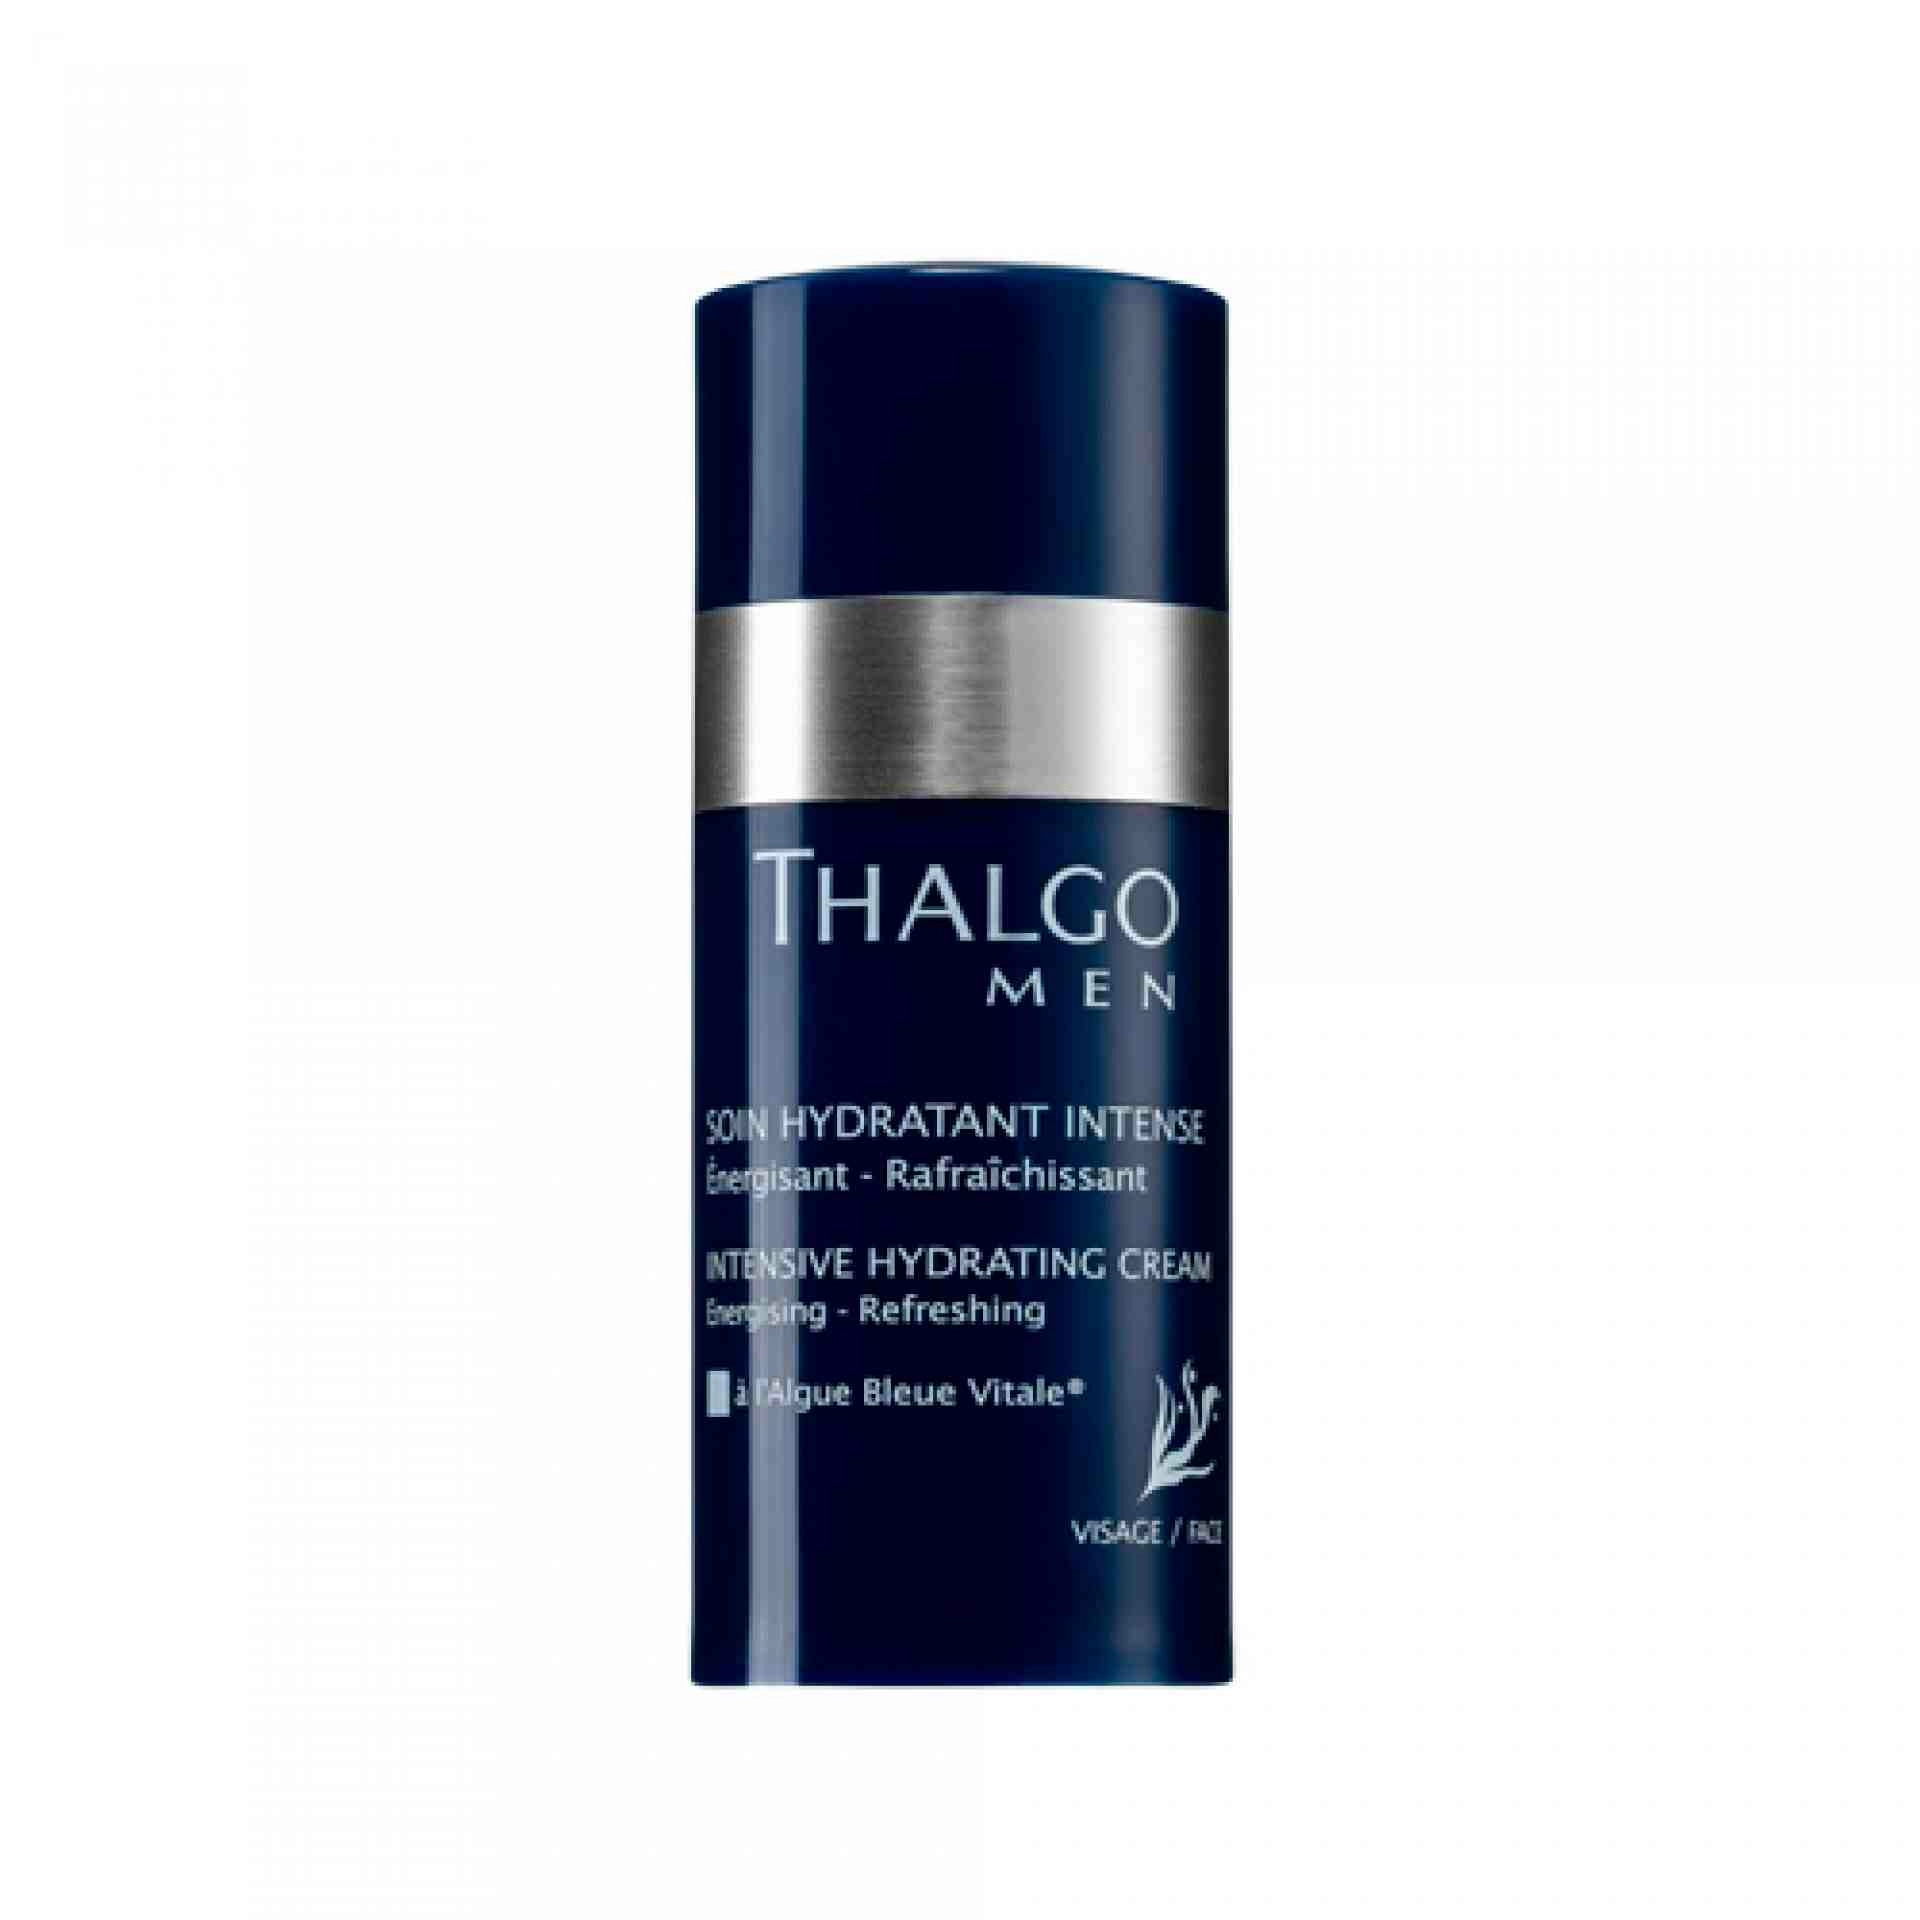 Soin Hydratant Intense | Crema Hidratante 50ml - Thalgo Men - Thalgo ®